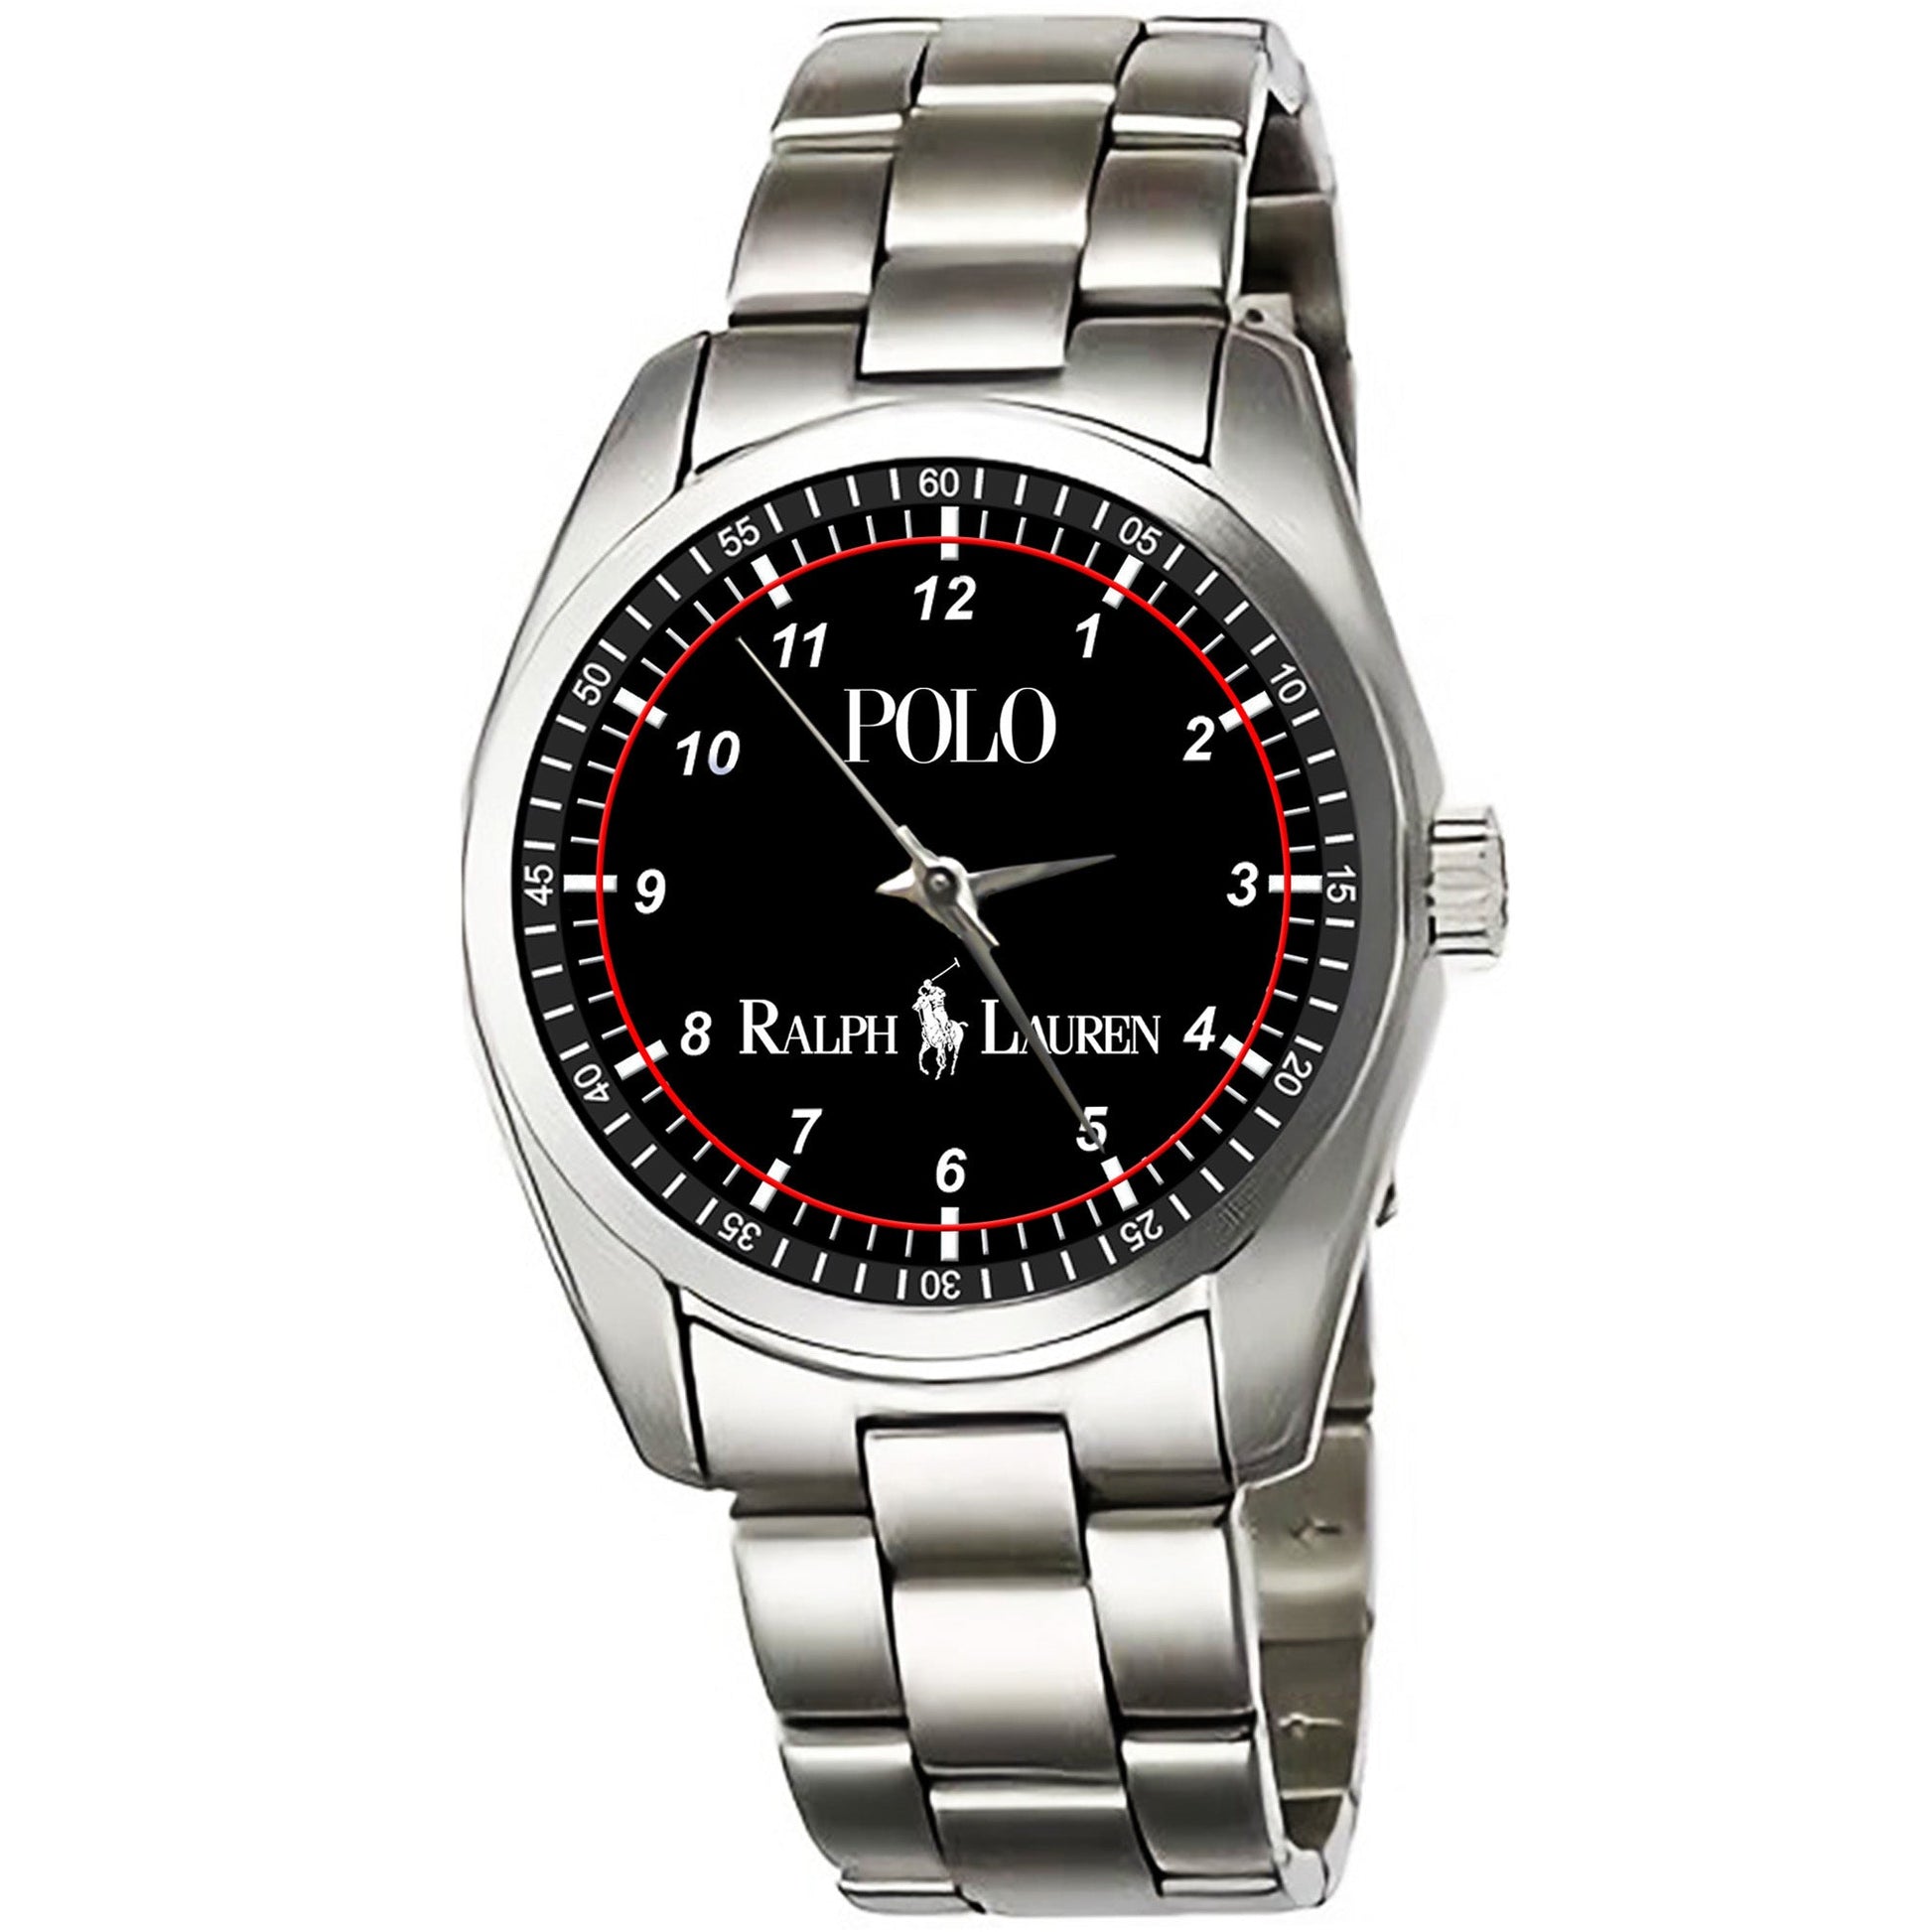 Polo Ralph Lauren Logo Sport Watches WE059